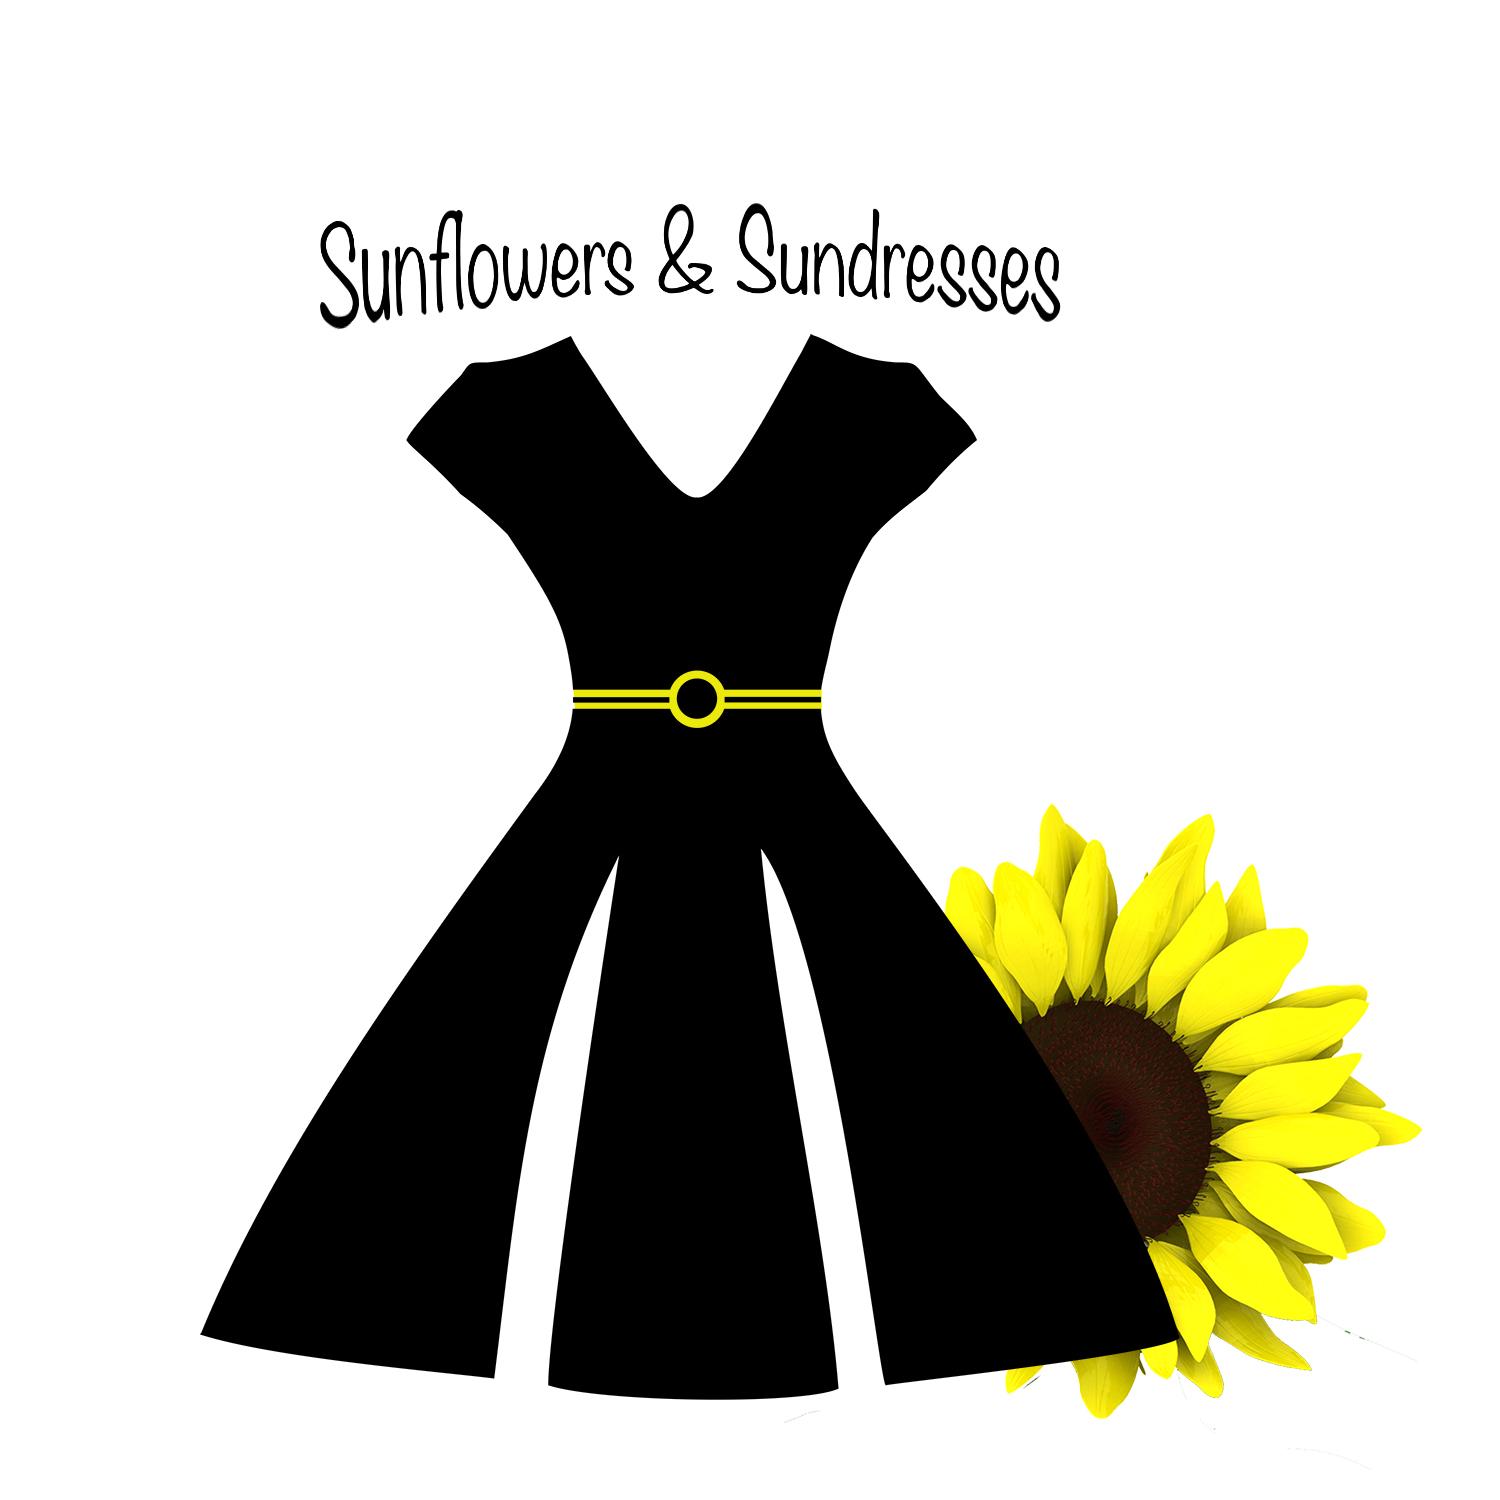 Sunflowers and Sundresses: Leggings as pants